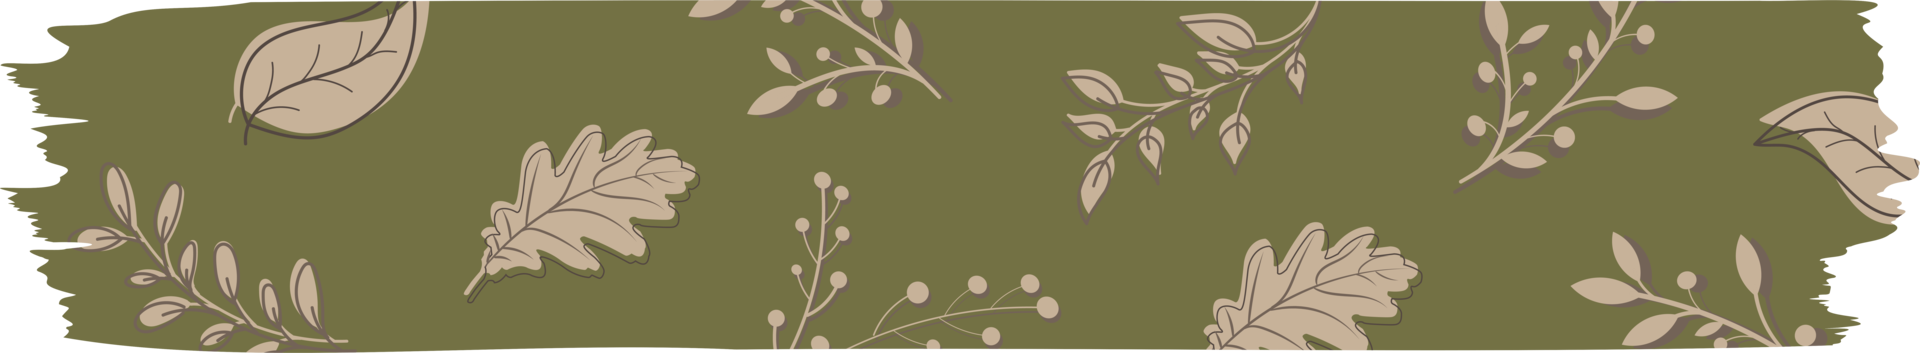 ruban adhésif washi avec illustration de fleurs florales png